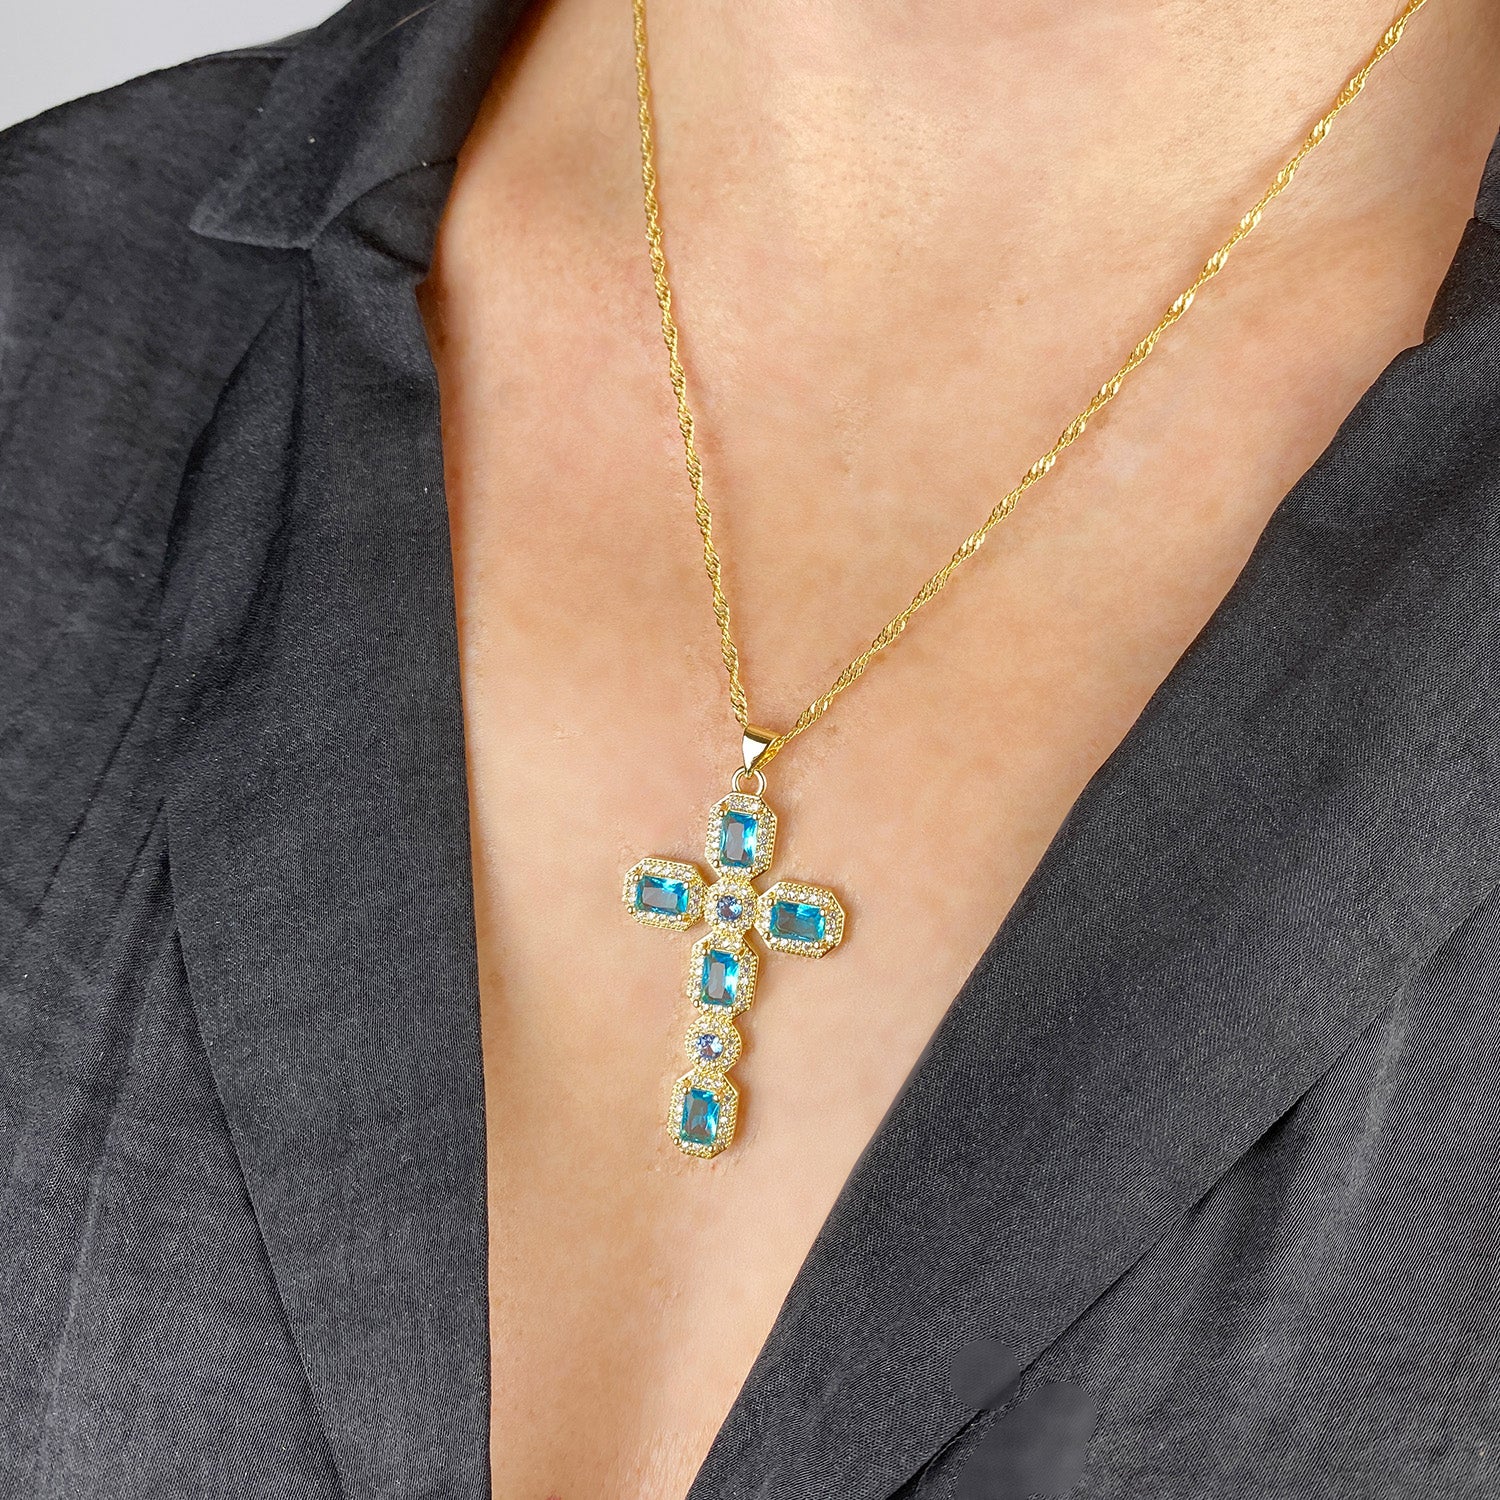 Cross necklace for women | Cross Royal